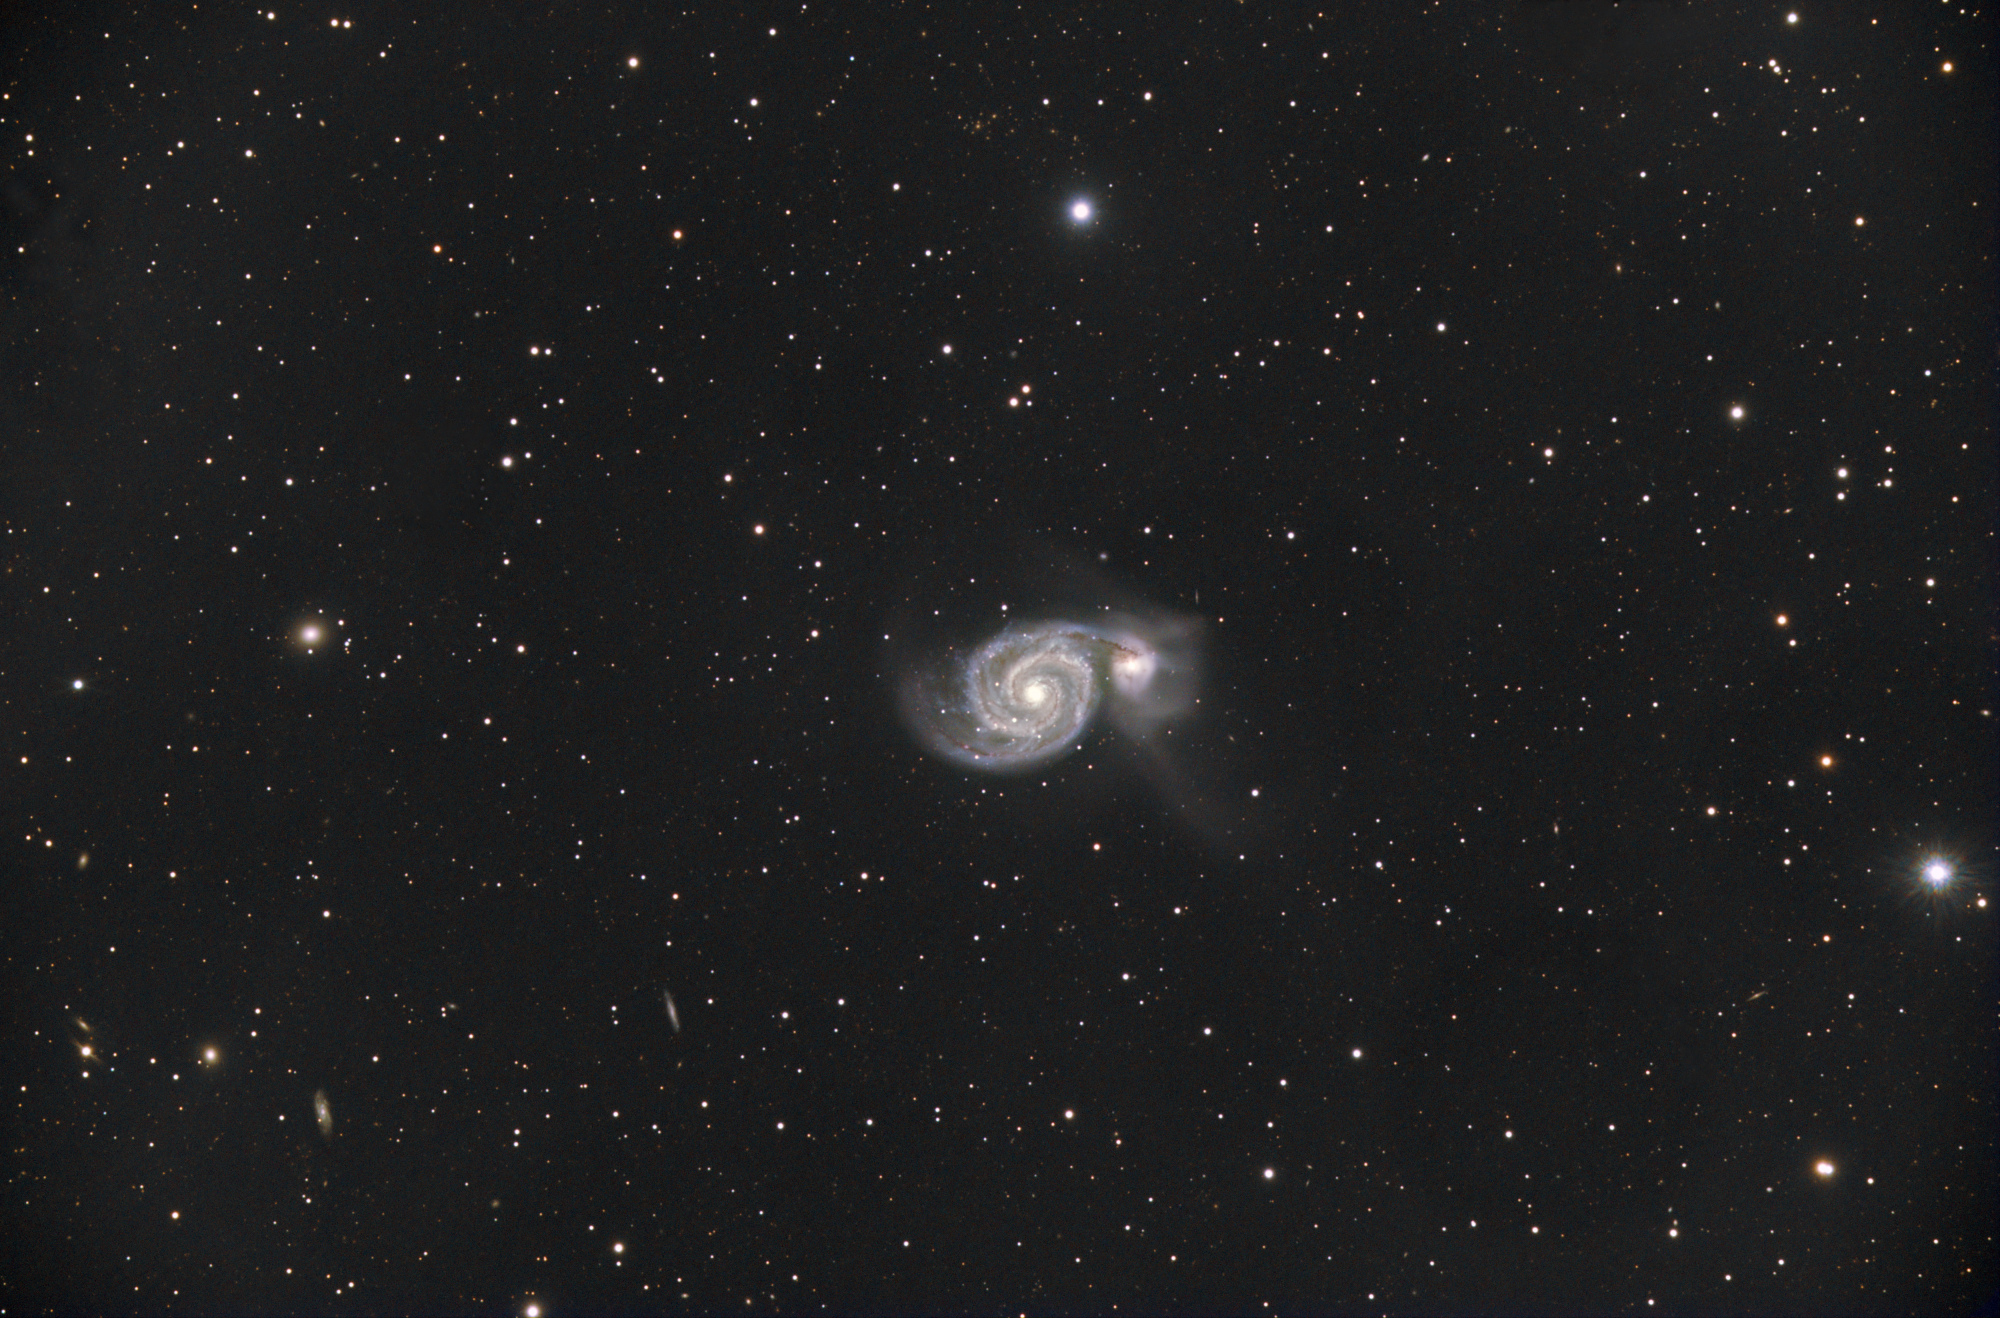 M51_SIRIL-1-IRIS-1-cs5-FINAL-4.jpg